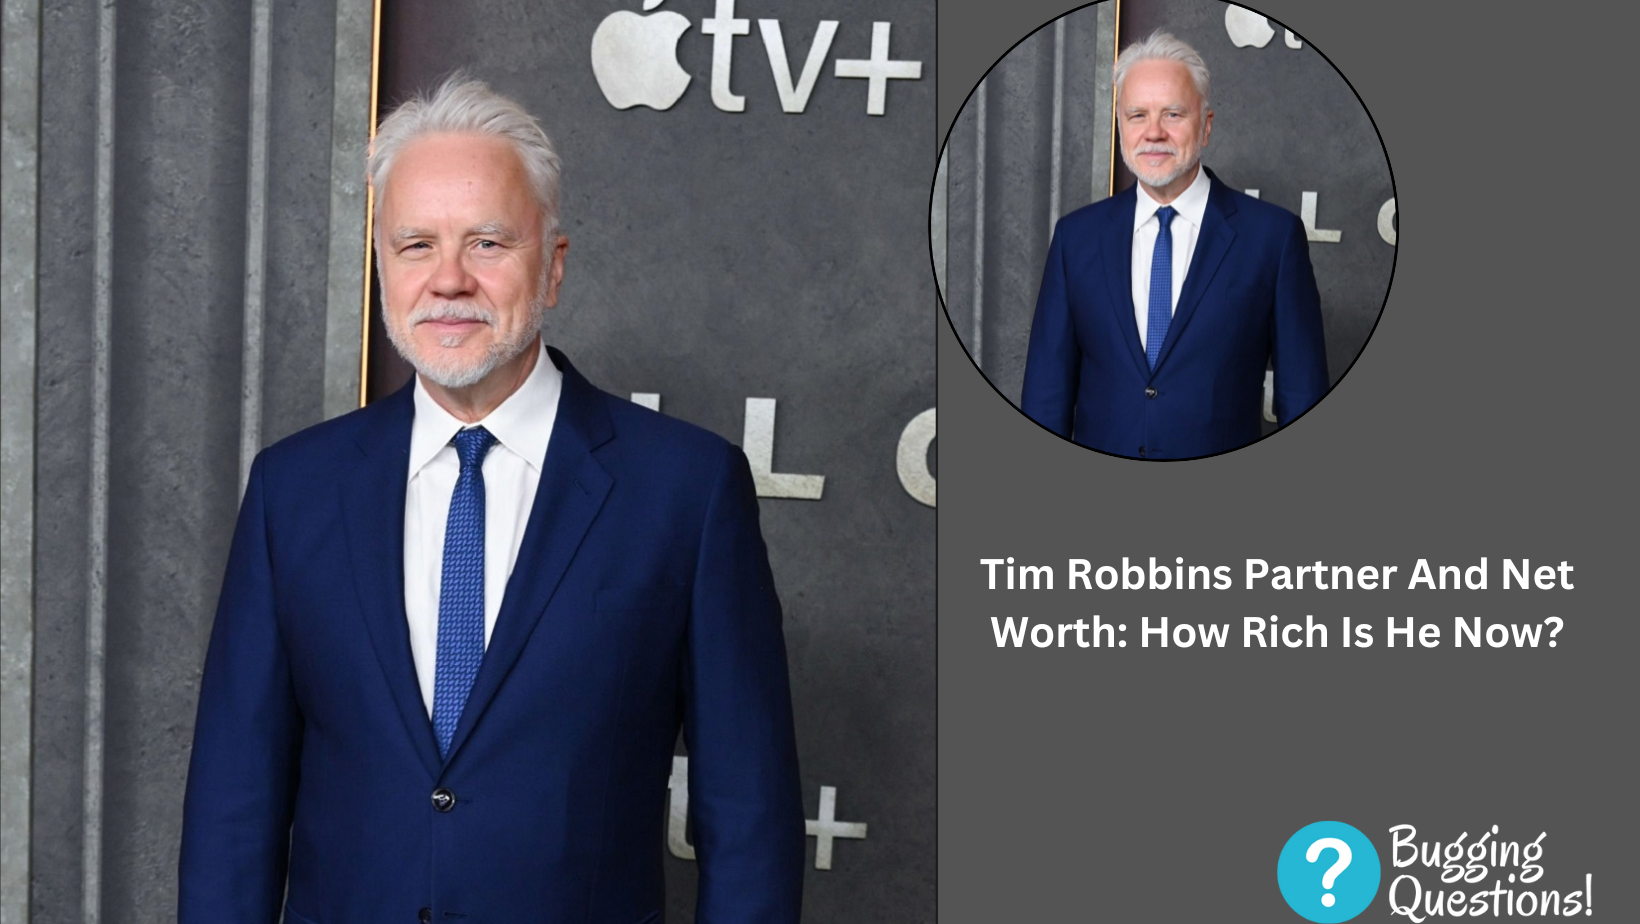 Tim Robbins Partner And Net Worth